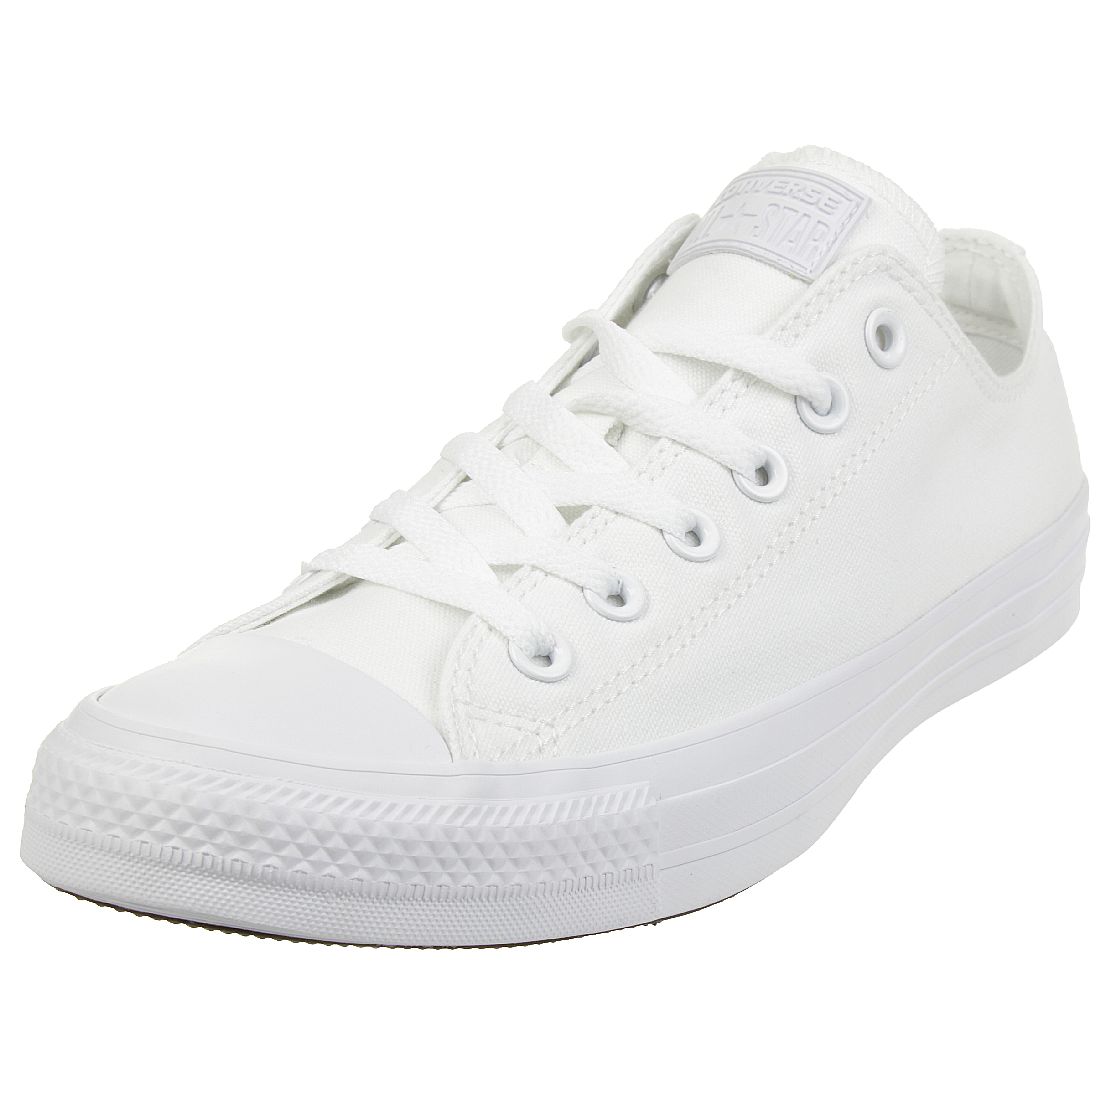 Converse All Star OX Chuck Schuhe Sneaker canvas White Monochrome 1U647